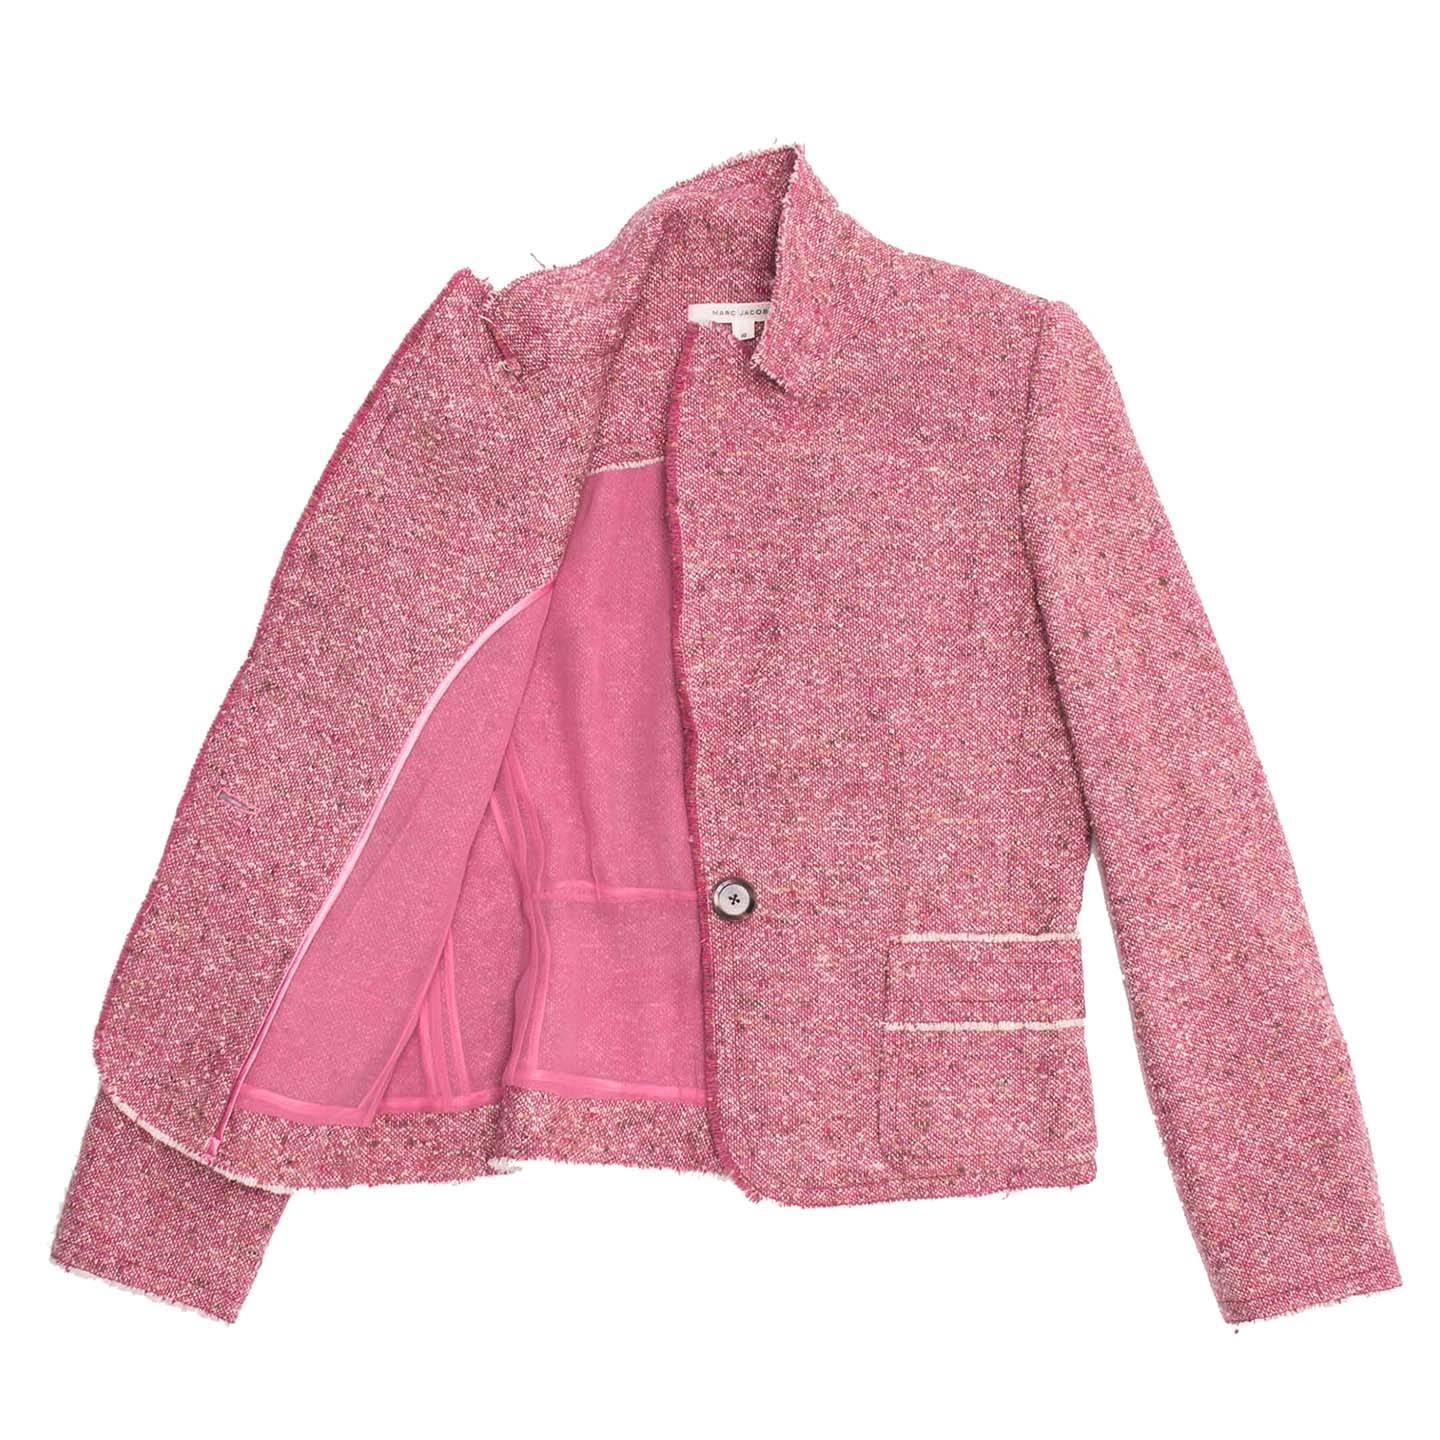 pink tweed blazer